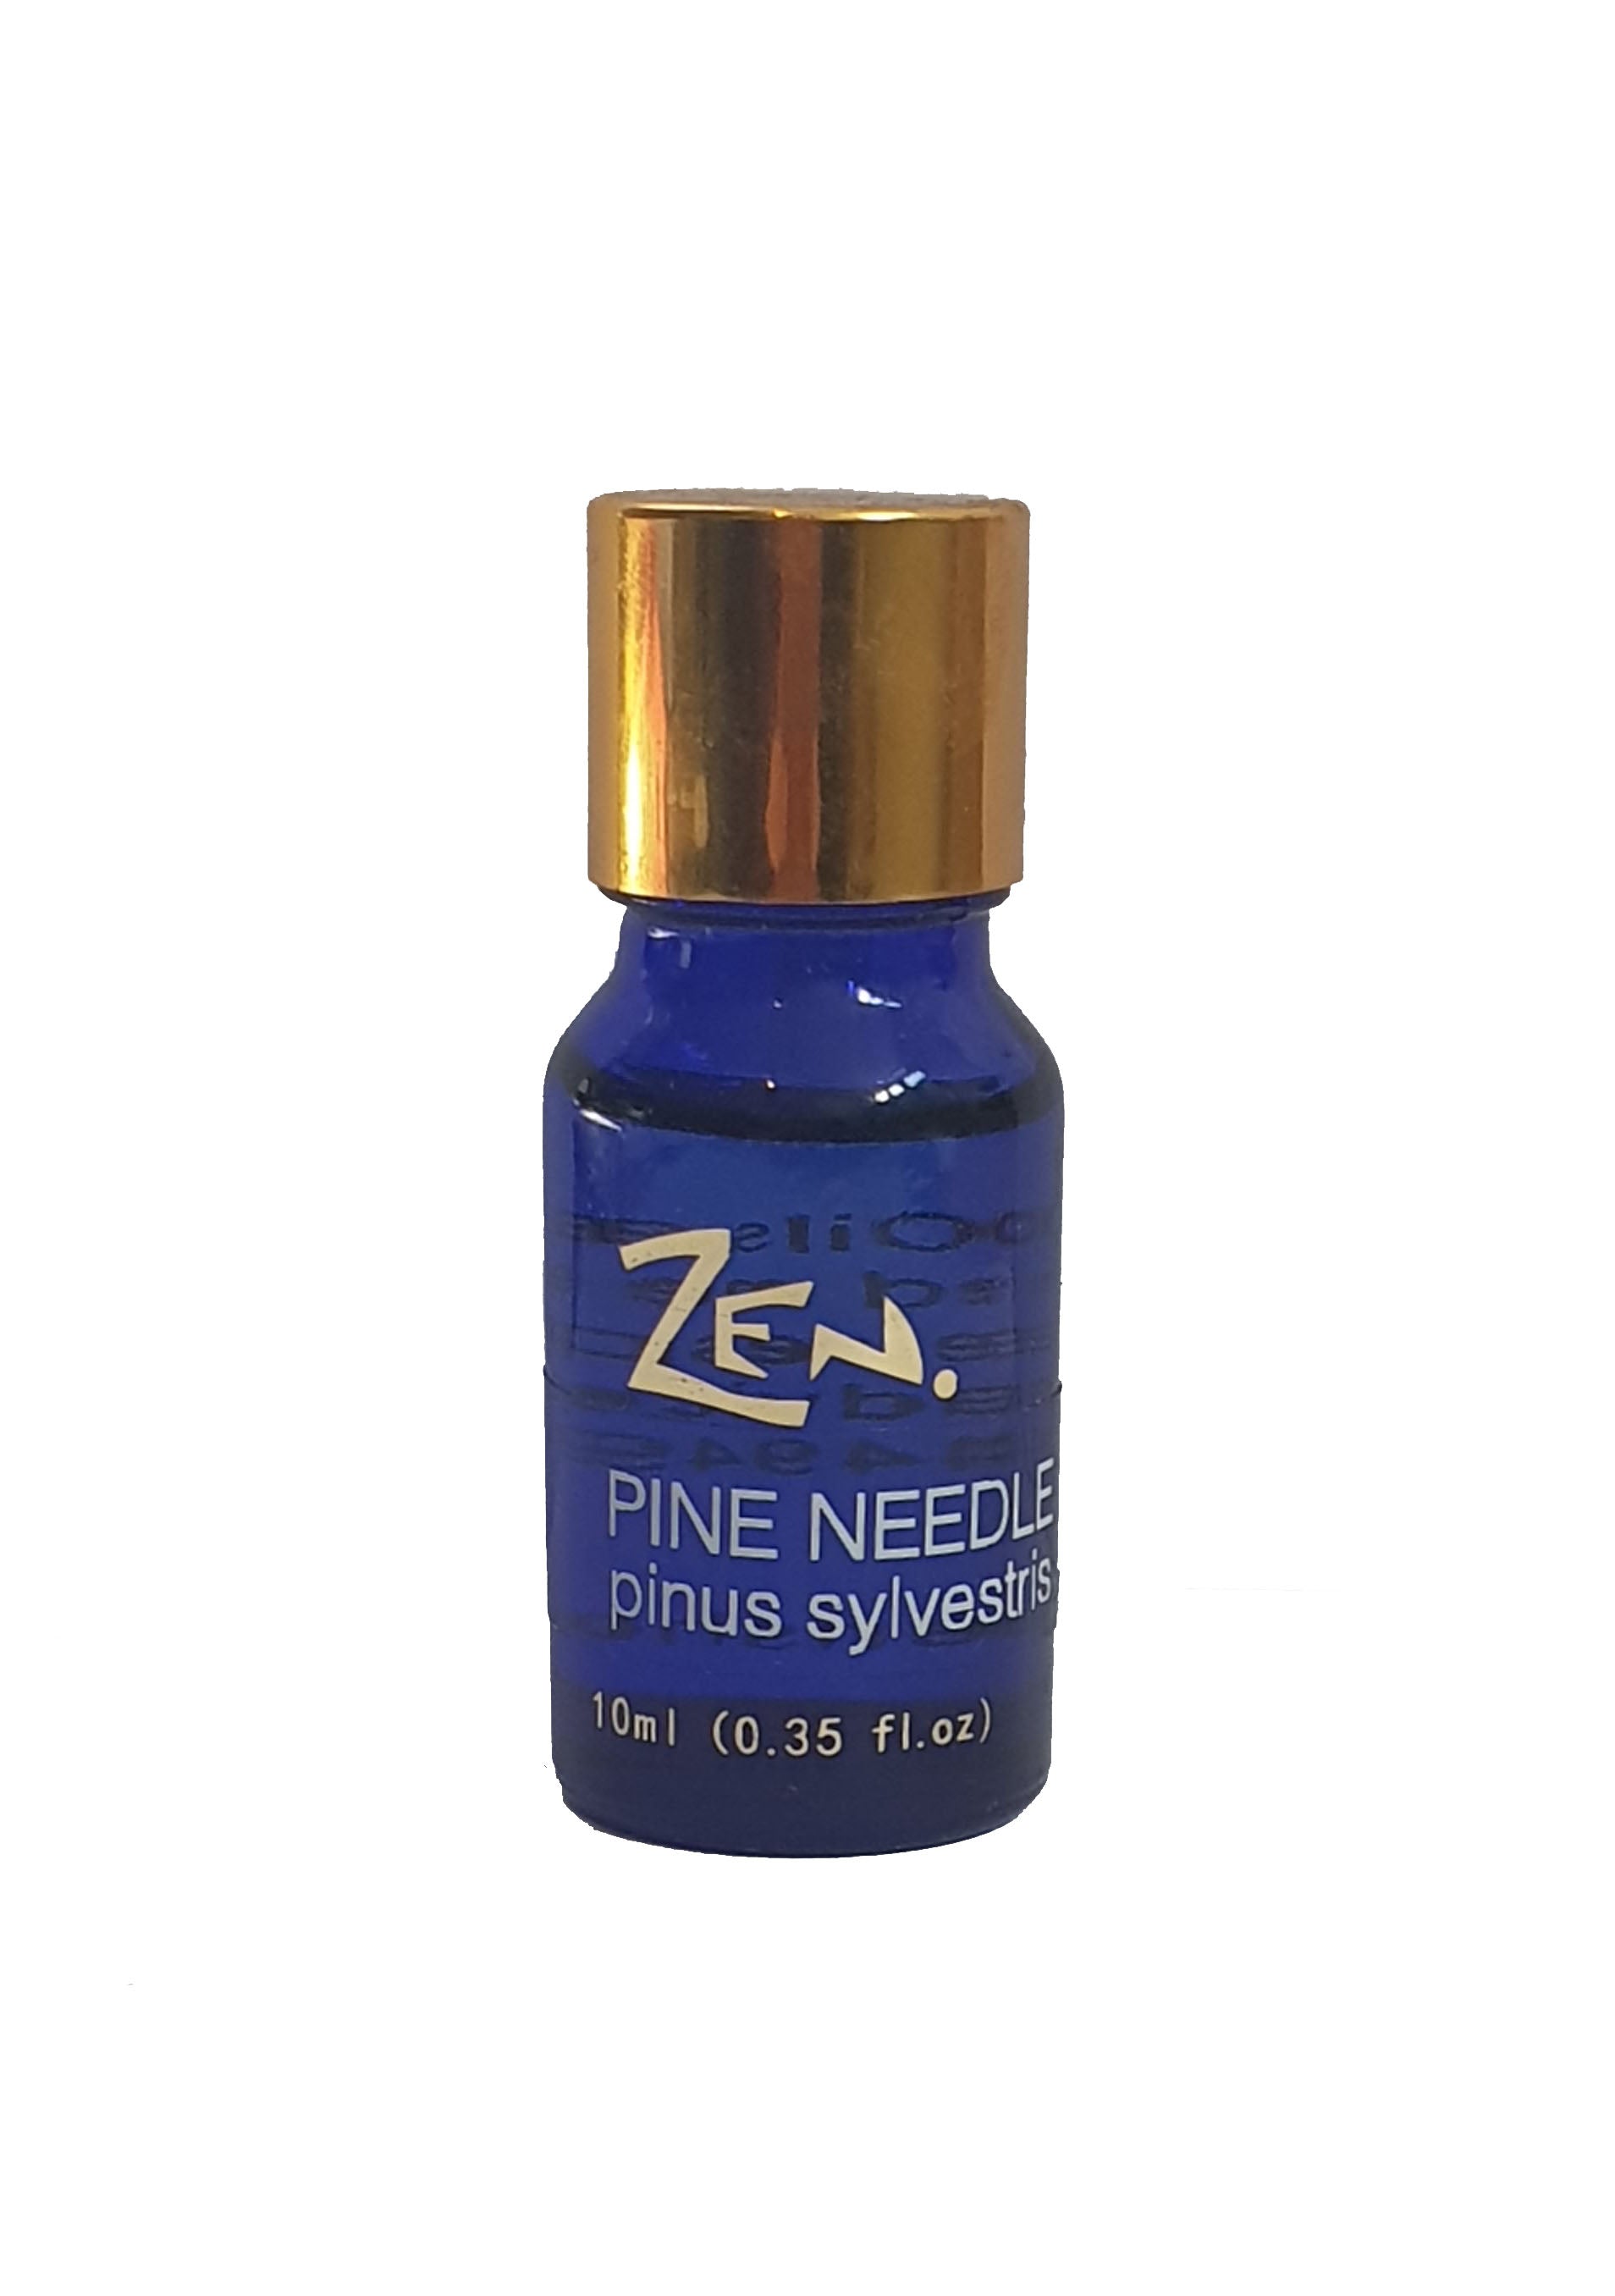 Pine Needle Essential Oil - 10ml